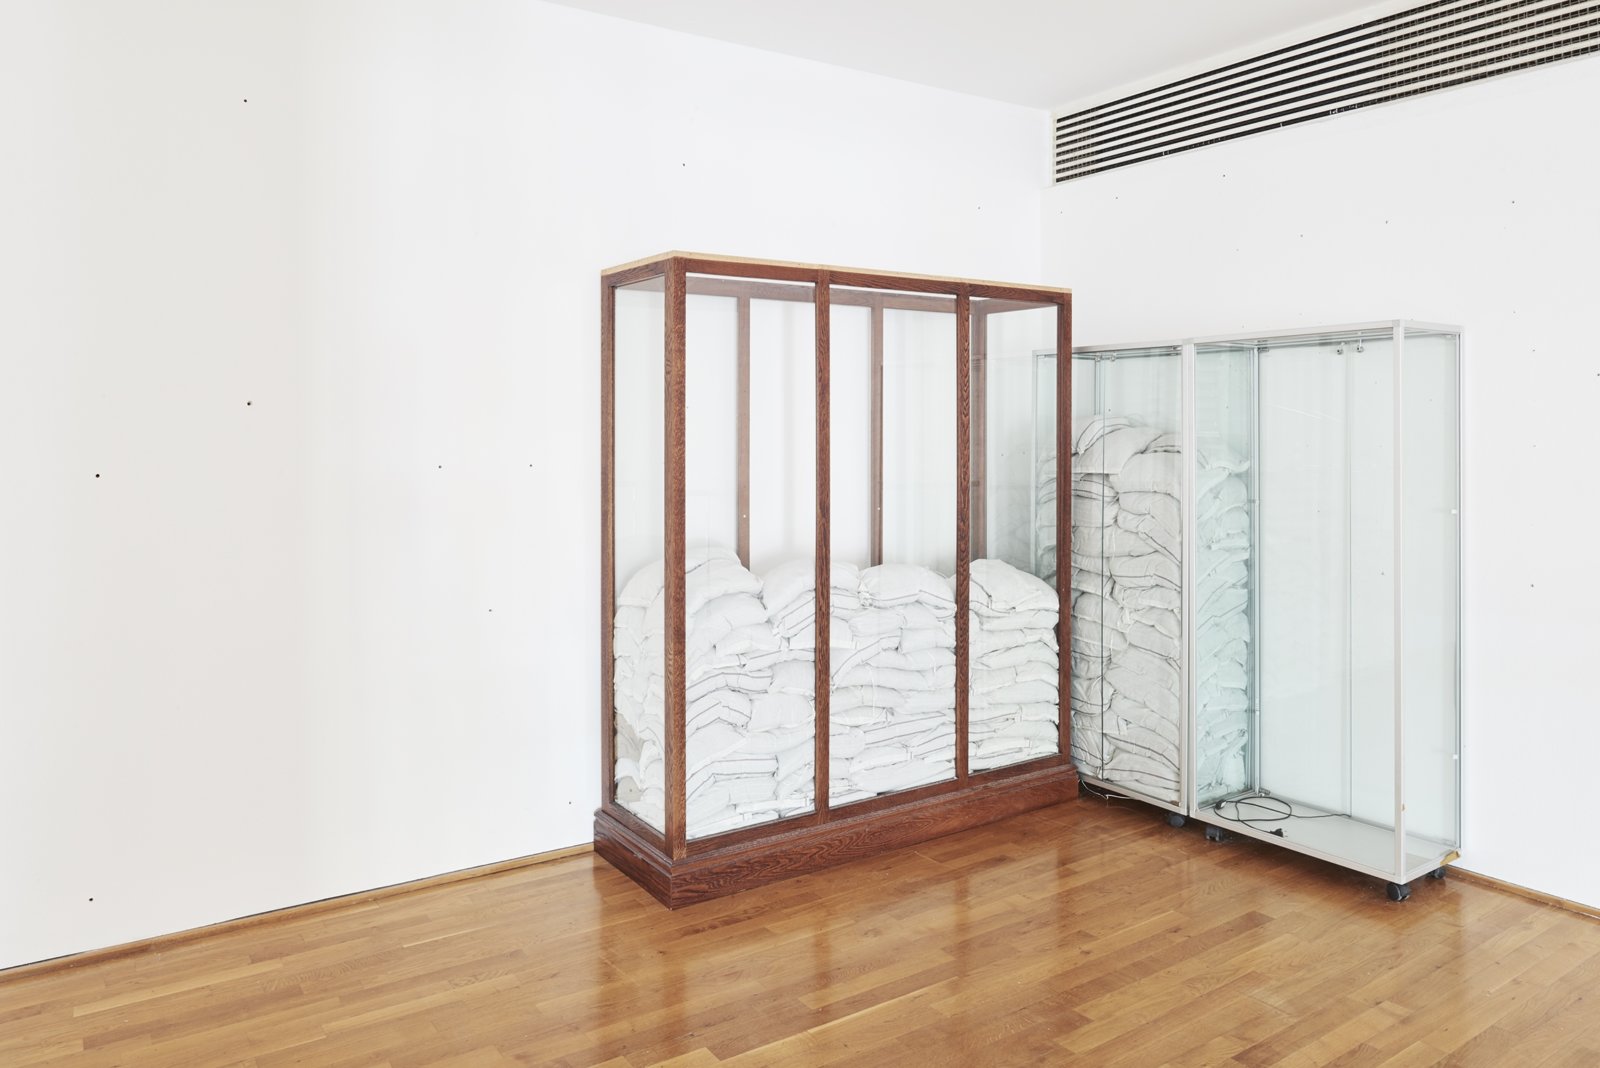 Abbas Akhavan, Untitled, 2017, vitrines, sandbags, insulation, 83 x 71 x 24 in. (210 x 180 x 60 cm) and 71 x 63 x 16 in. (180 x 160 x 40 cm). Installation view, Museum Villa Stuck, Munich, Germany, 2017